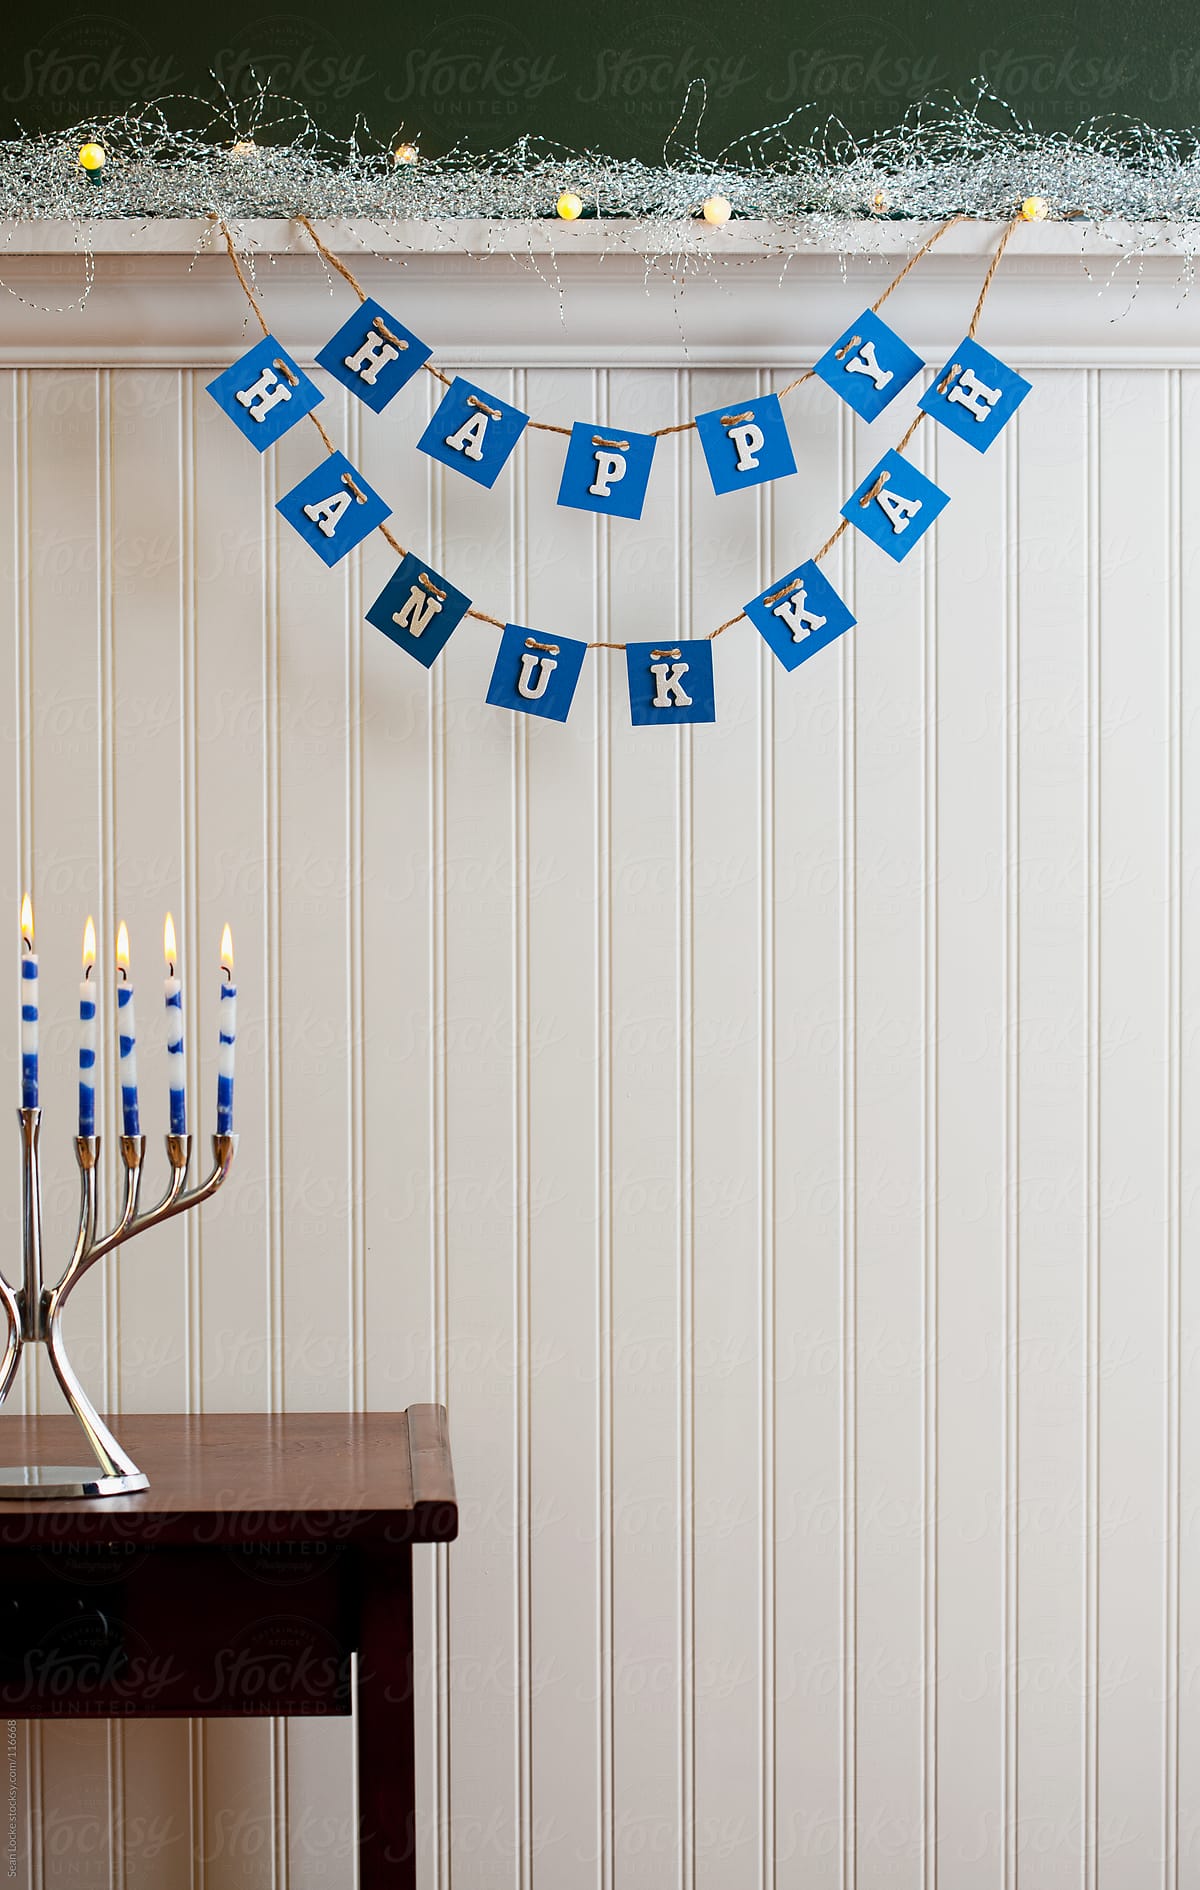 Holidays: Happy Hanukkah with Menorah